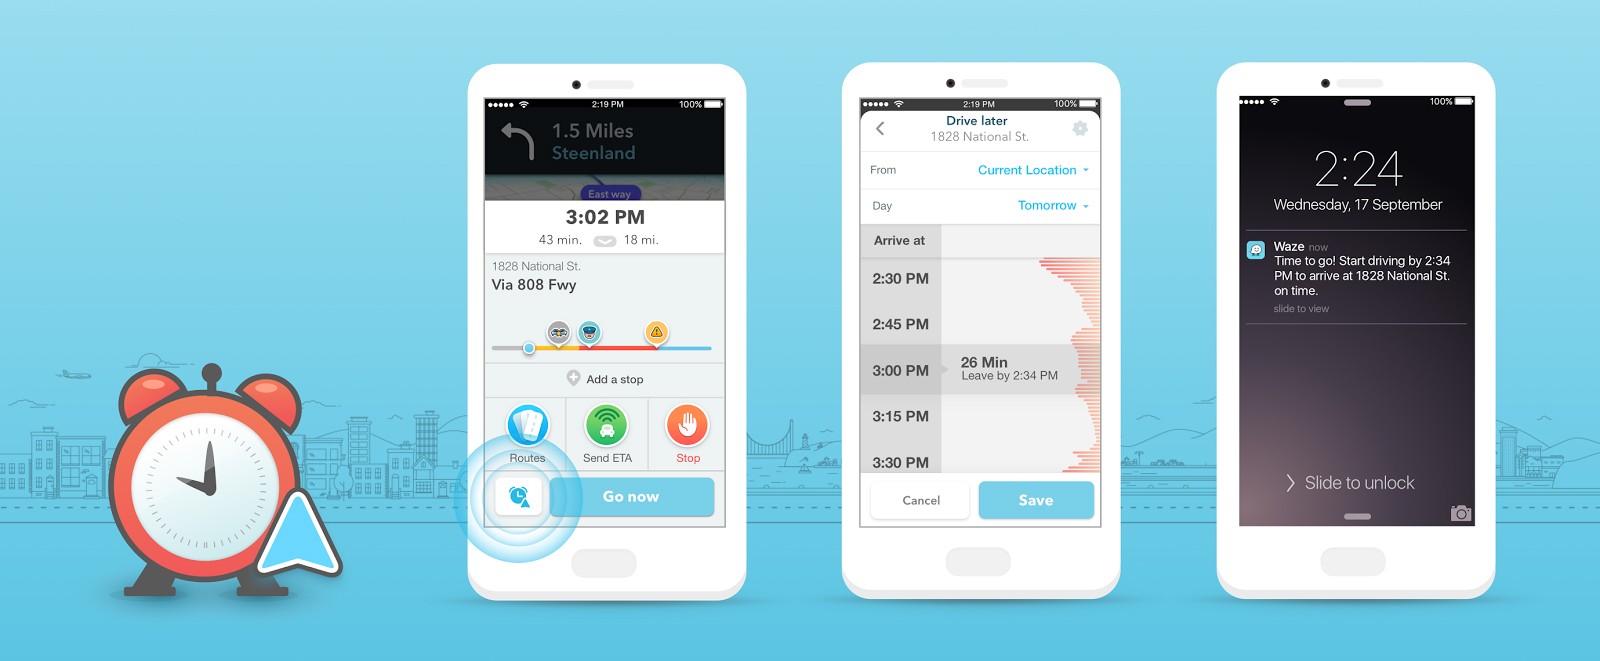 Waze Planned Drives_All iOS Screens (English_US)